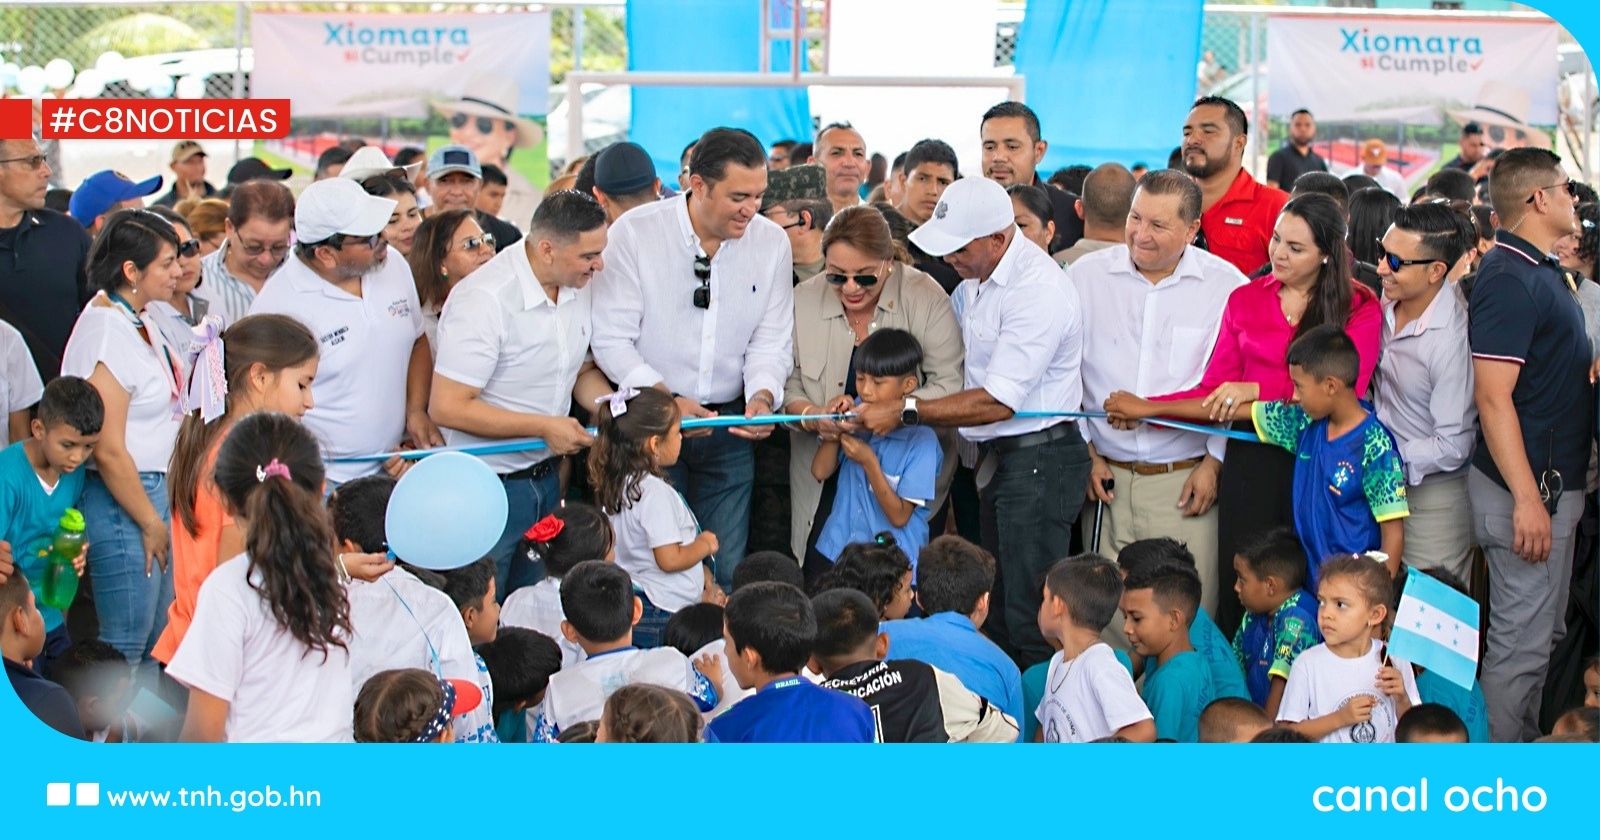 Presidenta Xiomara Castro inaugura la cancha 53 en la Villa de San Antonio, Comayagua